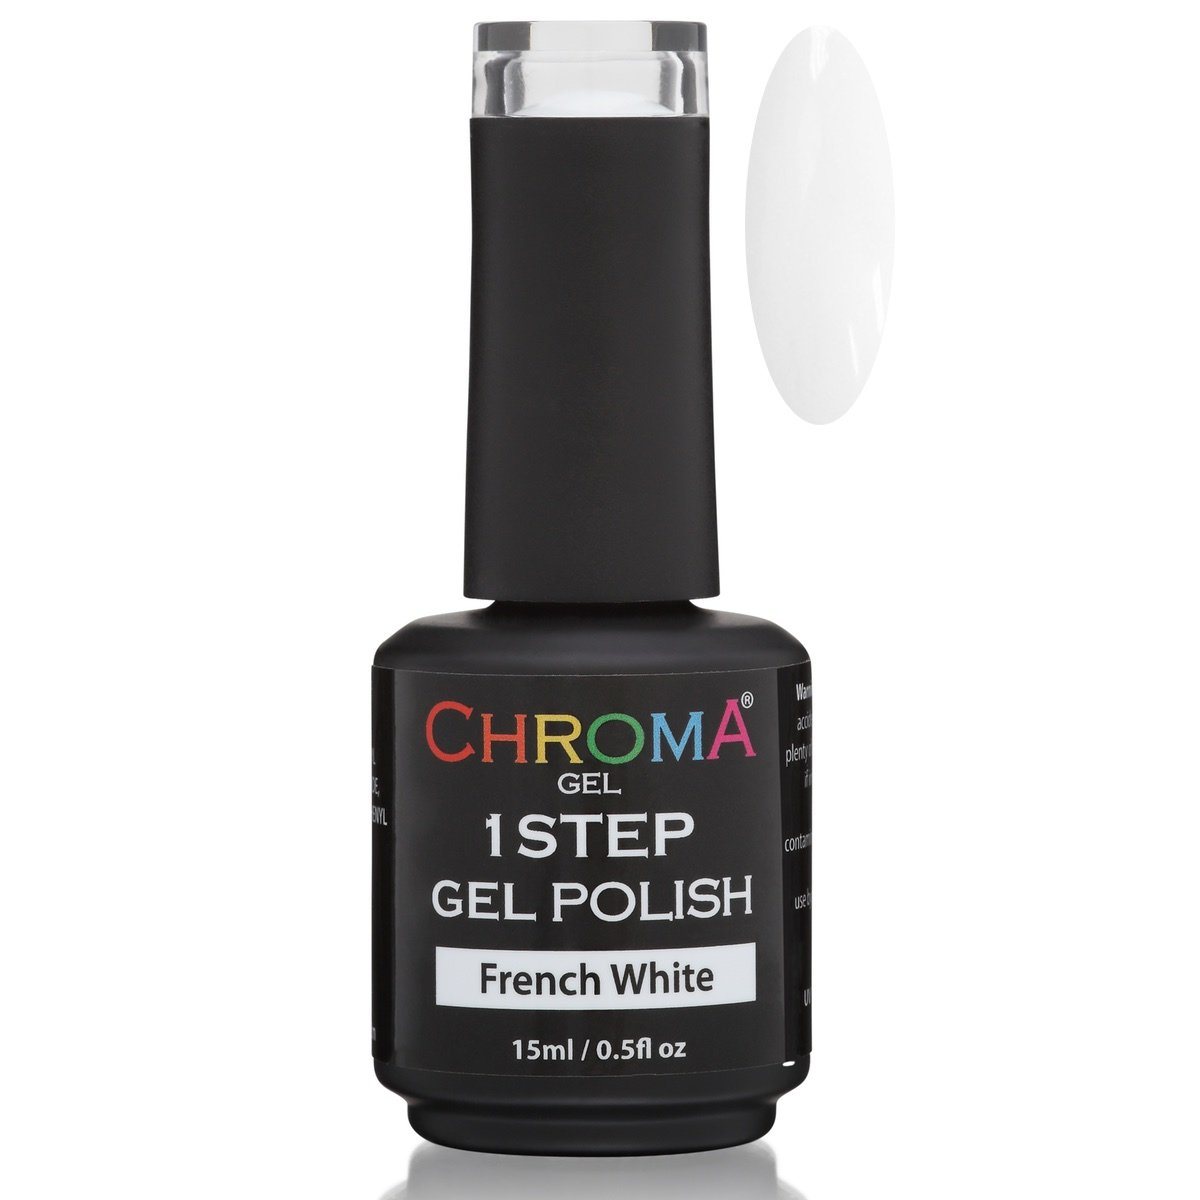 Chroma Gel 1-Step French White Gel Polish - beautyhair.co.ukChroma Gel